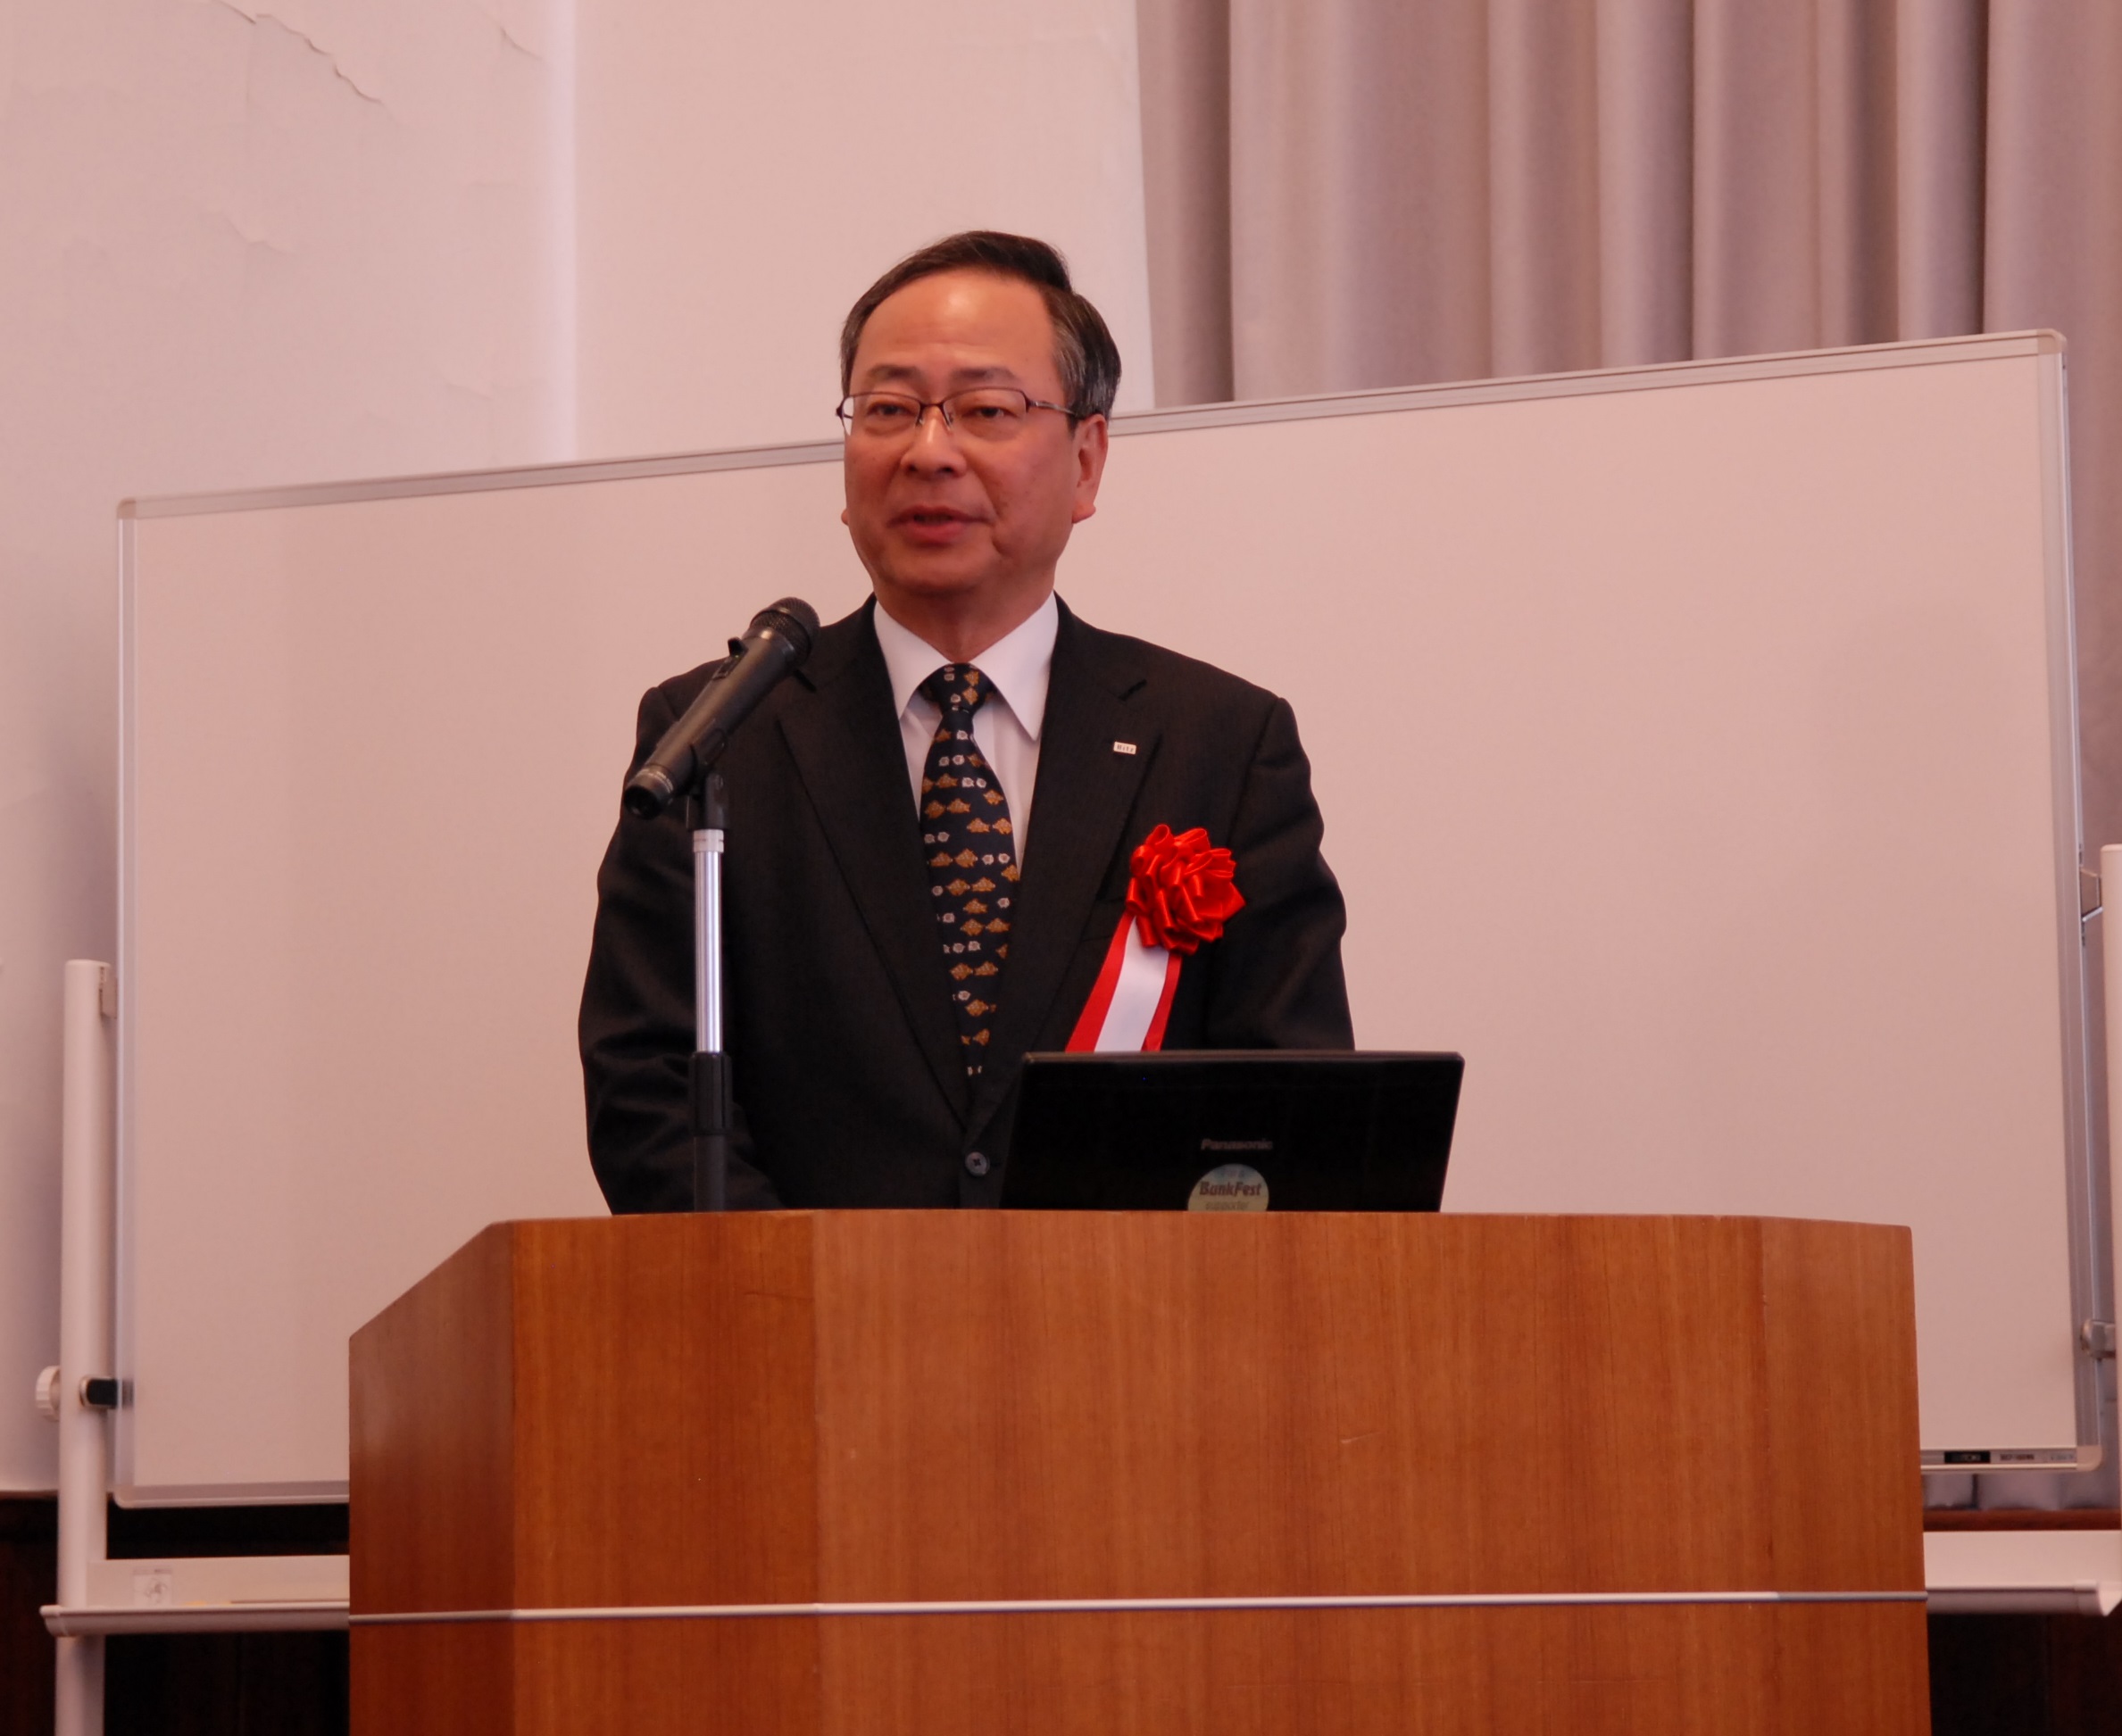 Mr. Sadao Mino, President of the Council for Cooperative Center